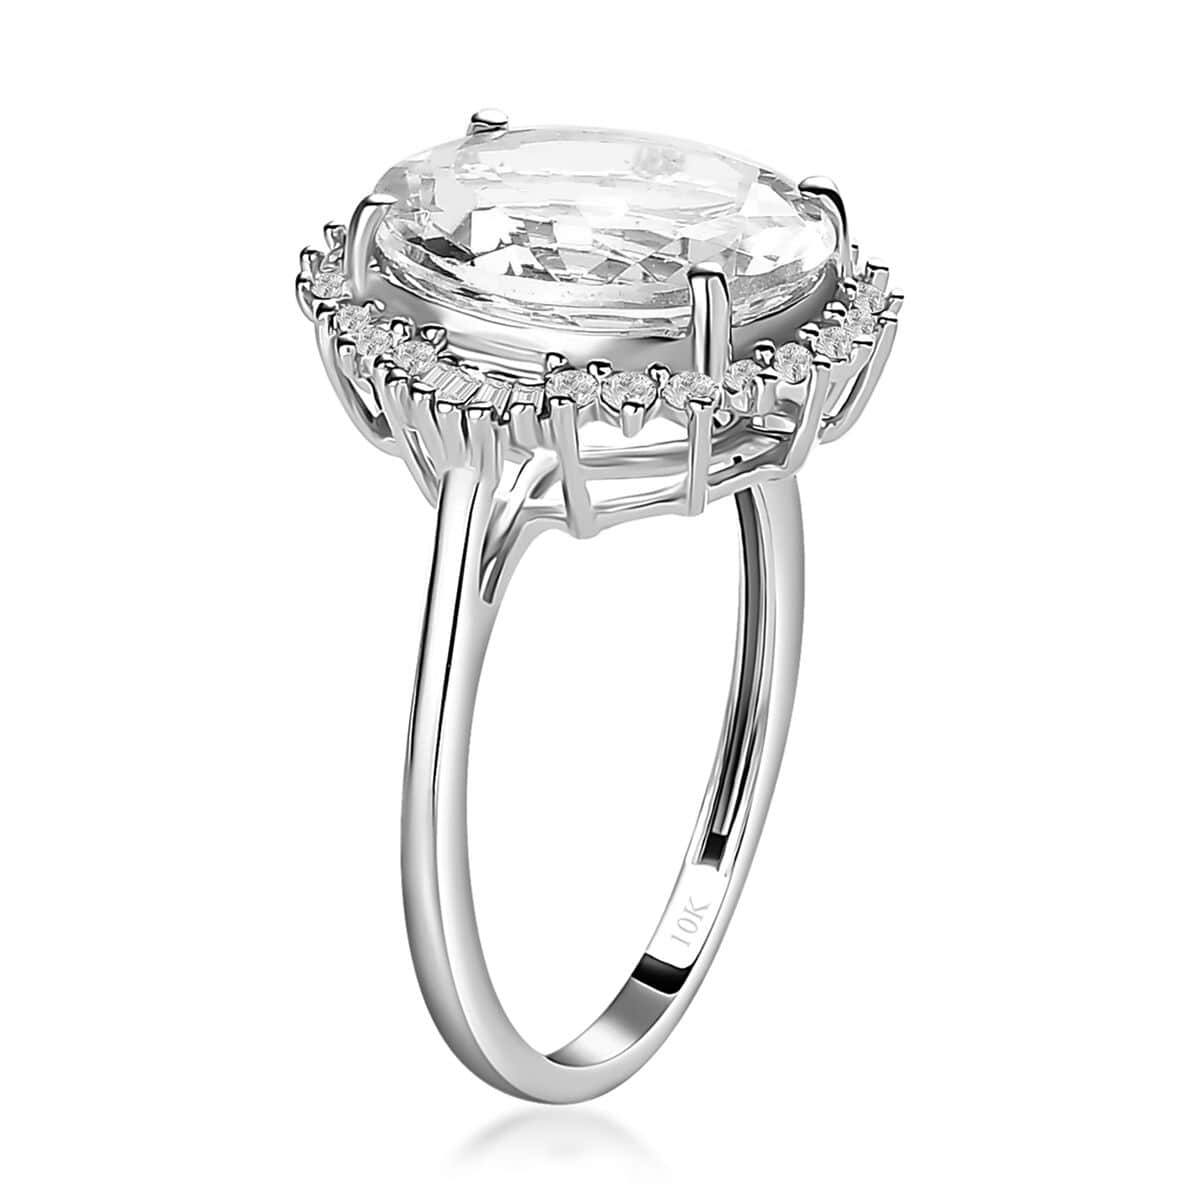 Luxoro 10K White Gold Premium Mangoro Aquamarine, Diamond (0.30 cts) Halo Ring (Size 10.0) 4.40 ctw image number 3